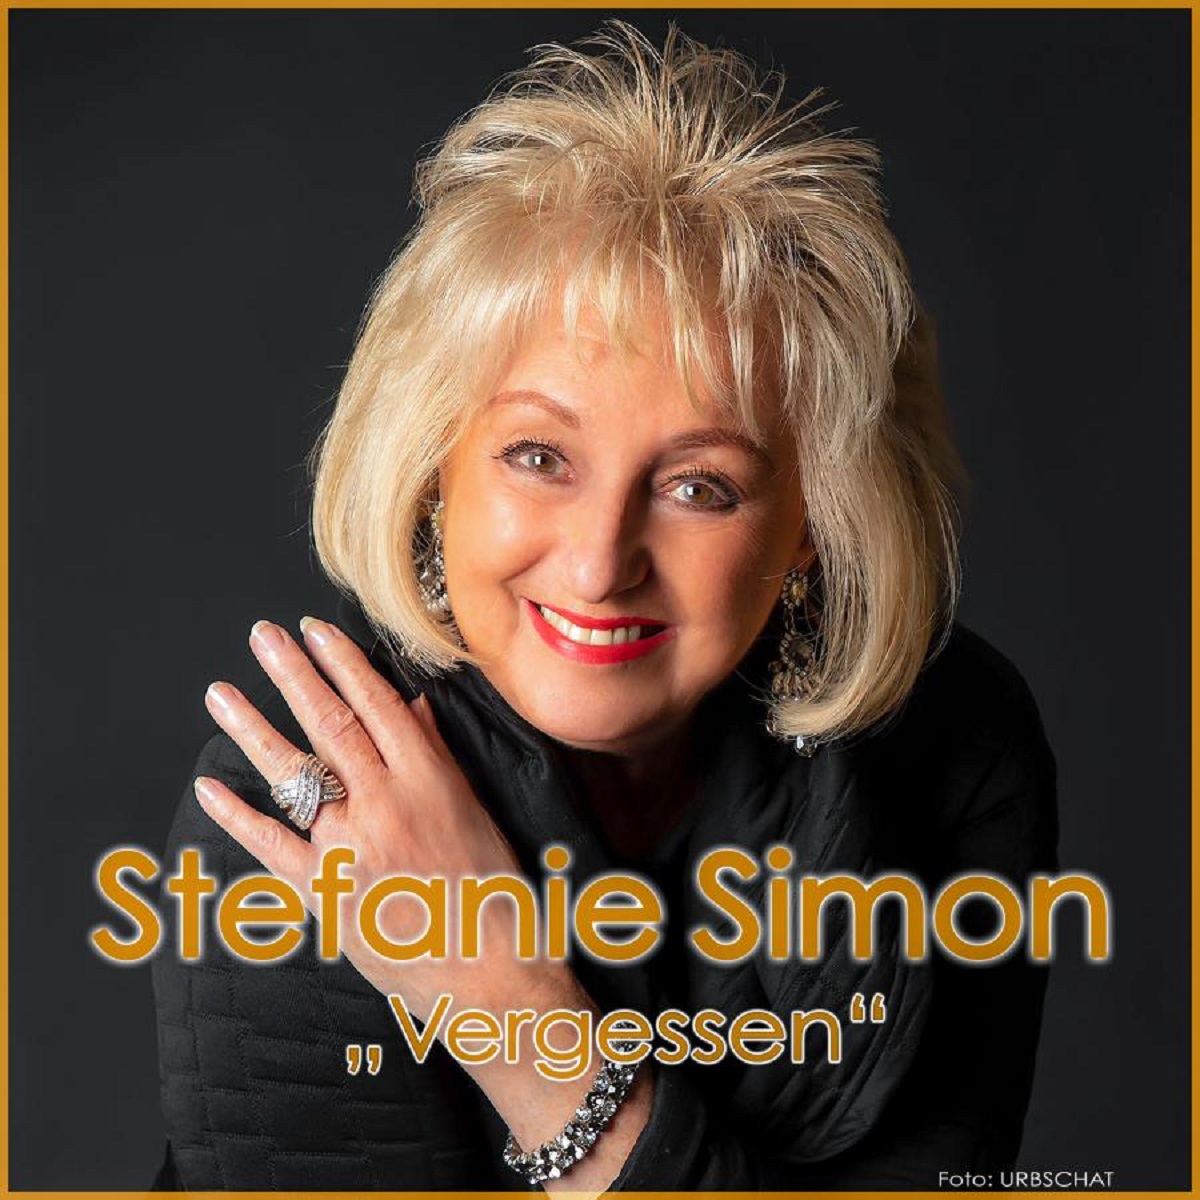 Stefanie Simon - vergessen - Cover.jpg